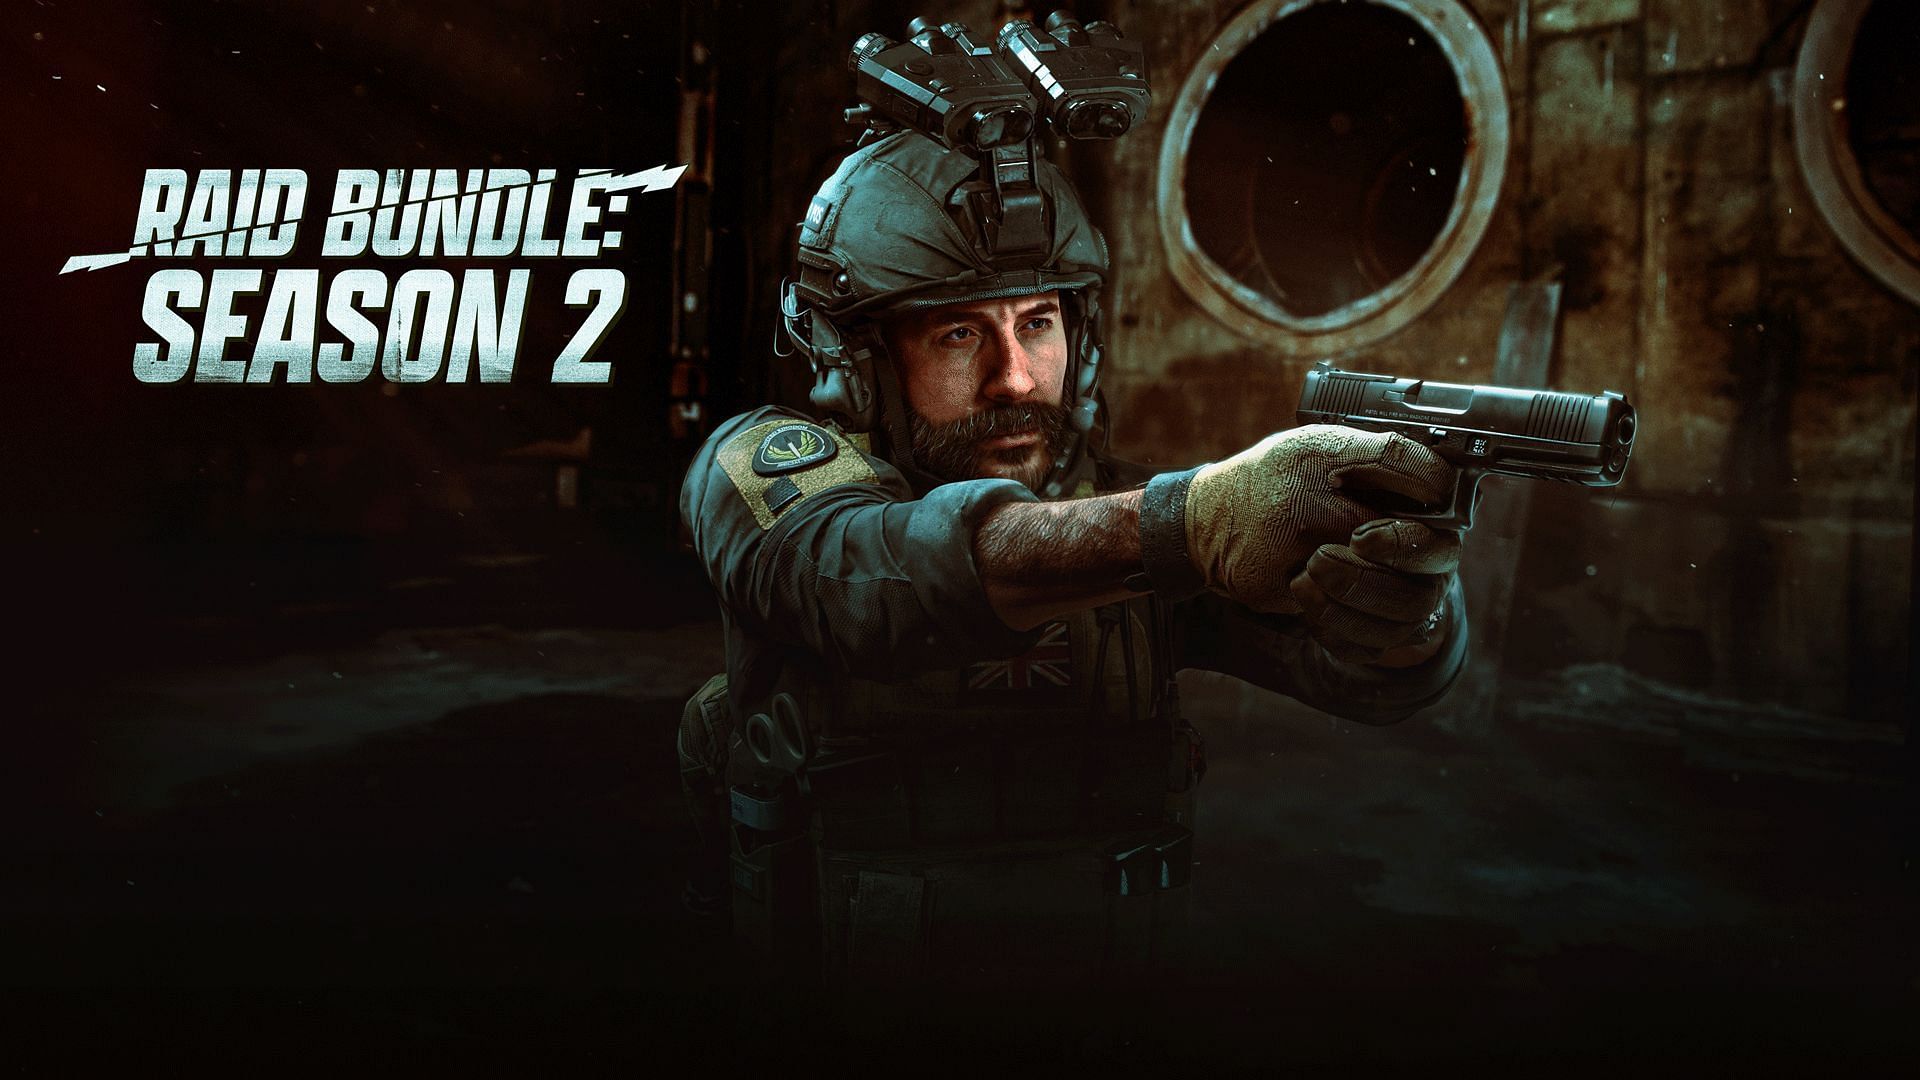 Season 2 Reloaded will introduce a new Raid Bundle in Modern Warfare 2 (Image via Activision) 